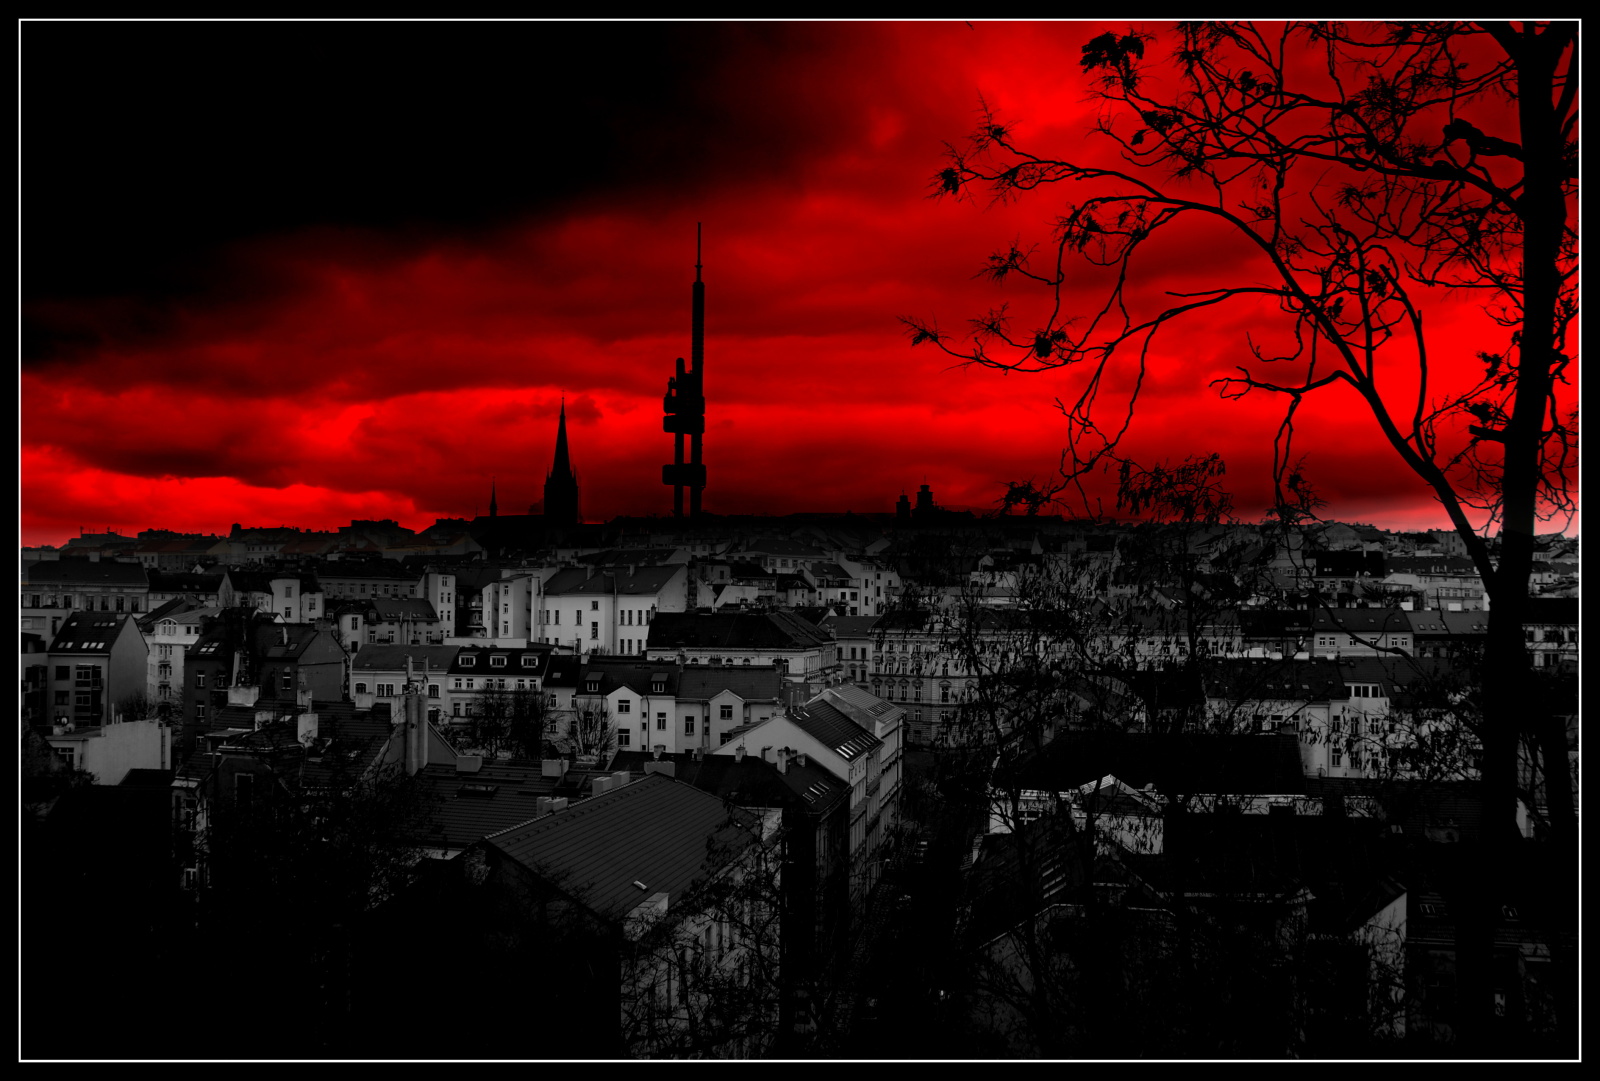 temno nad Prahou